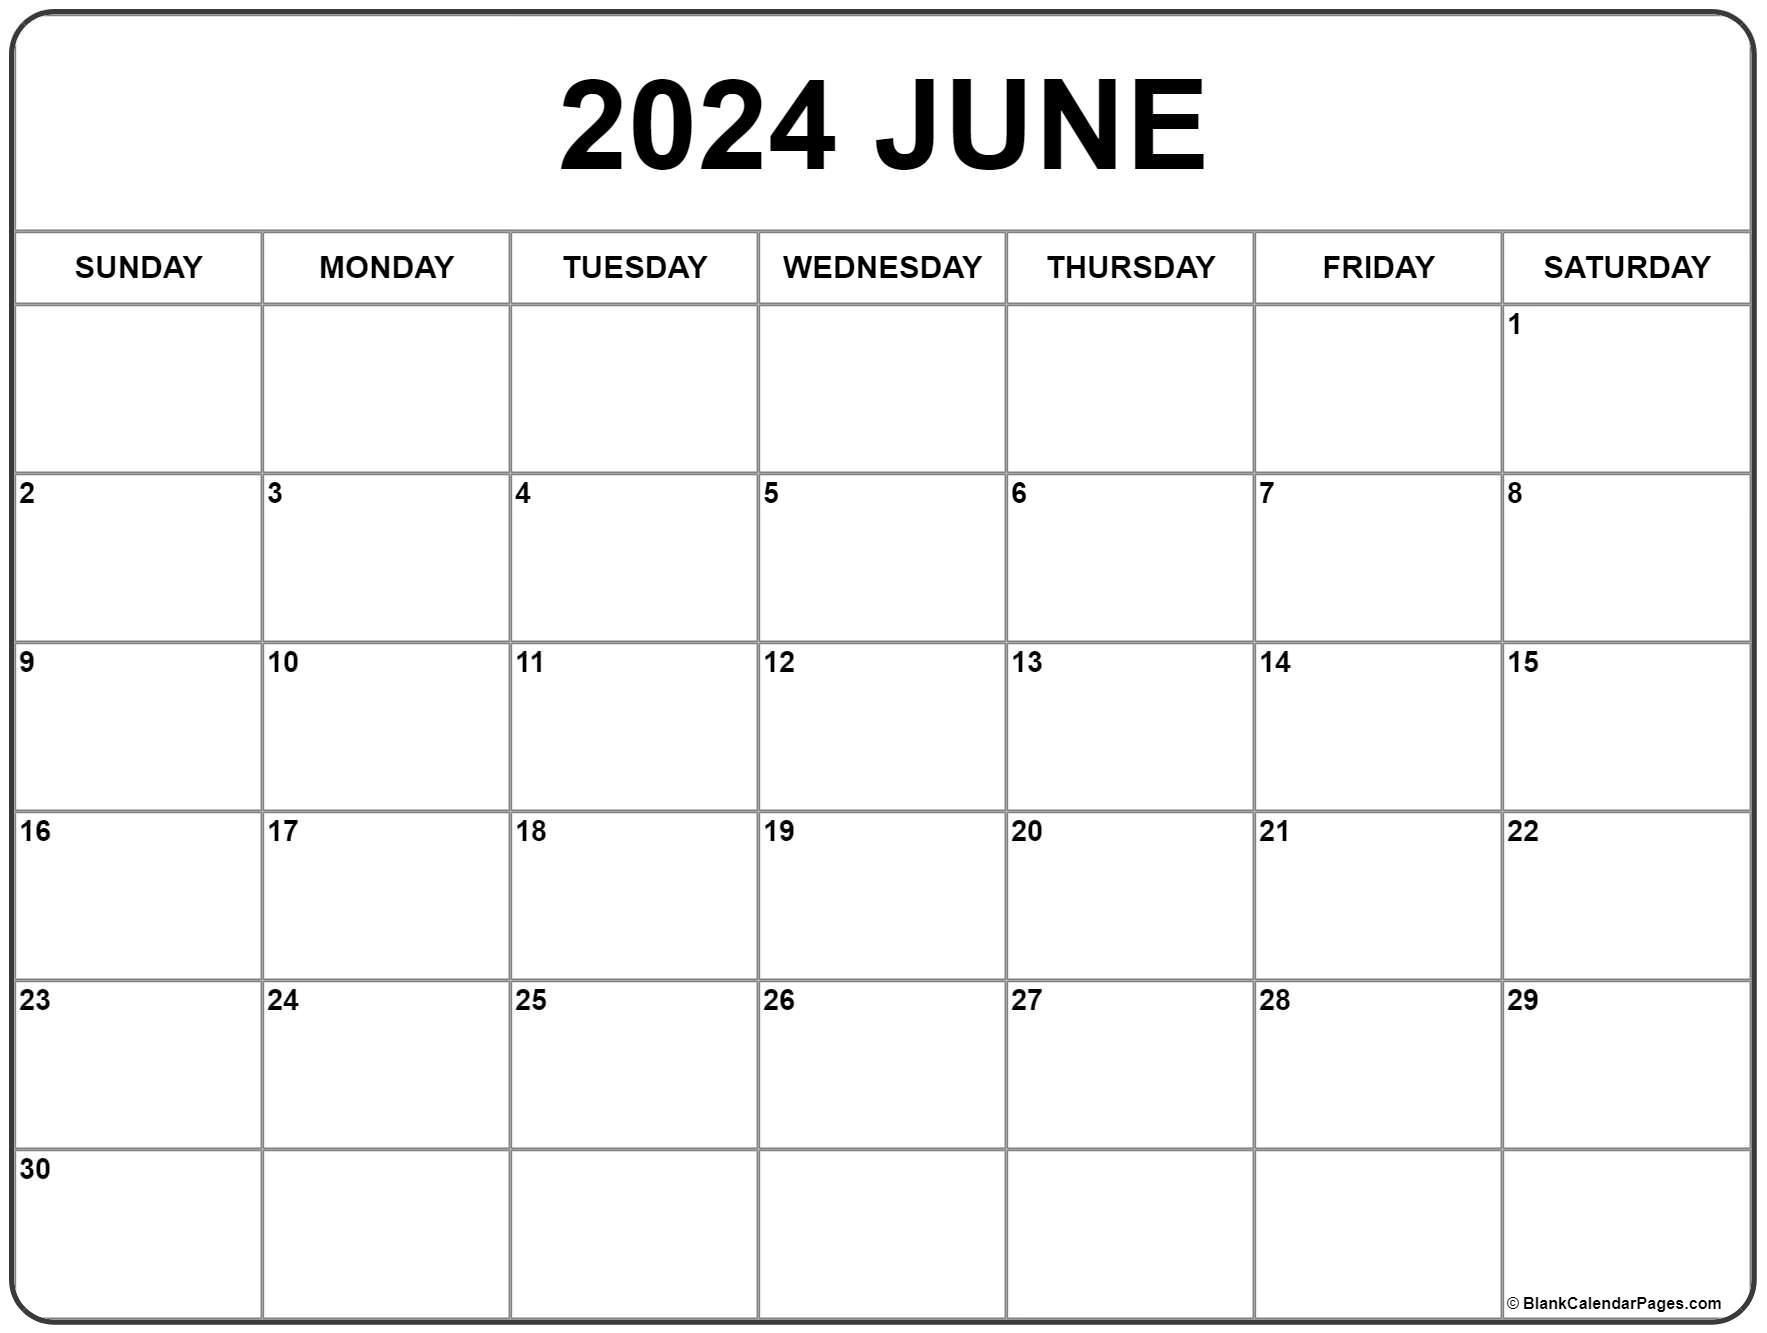 Free Printable Calendar June 2021 June 2021 calendar | free printable monthly calendars